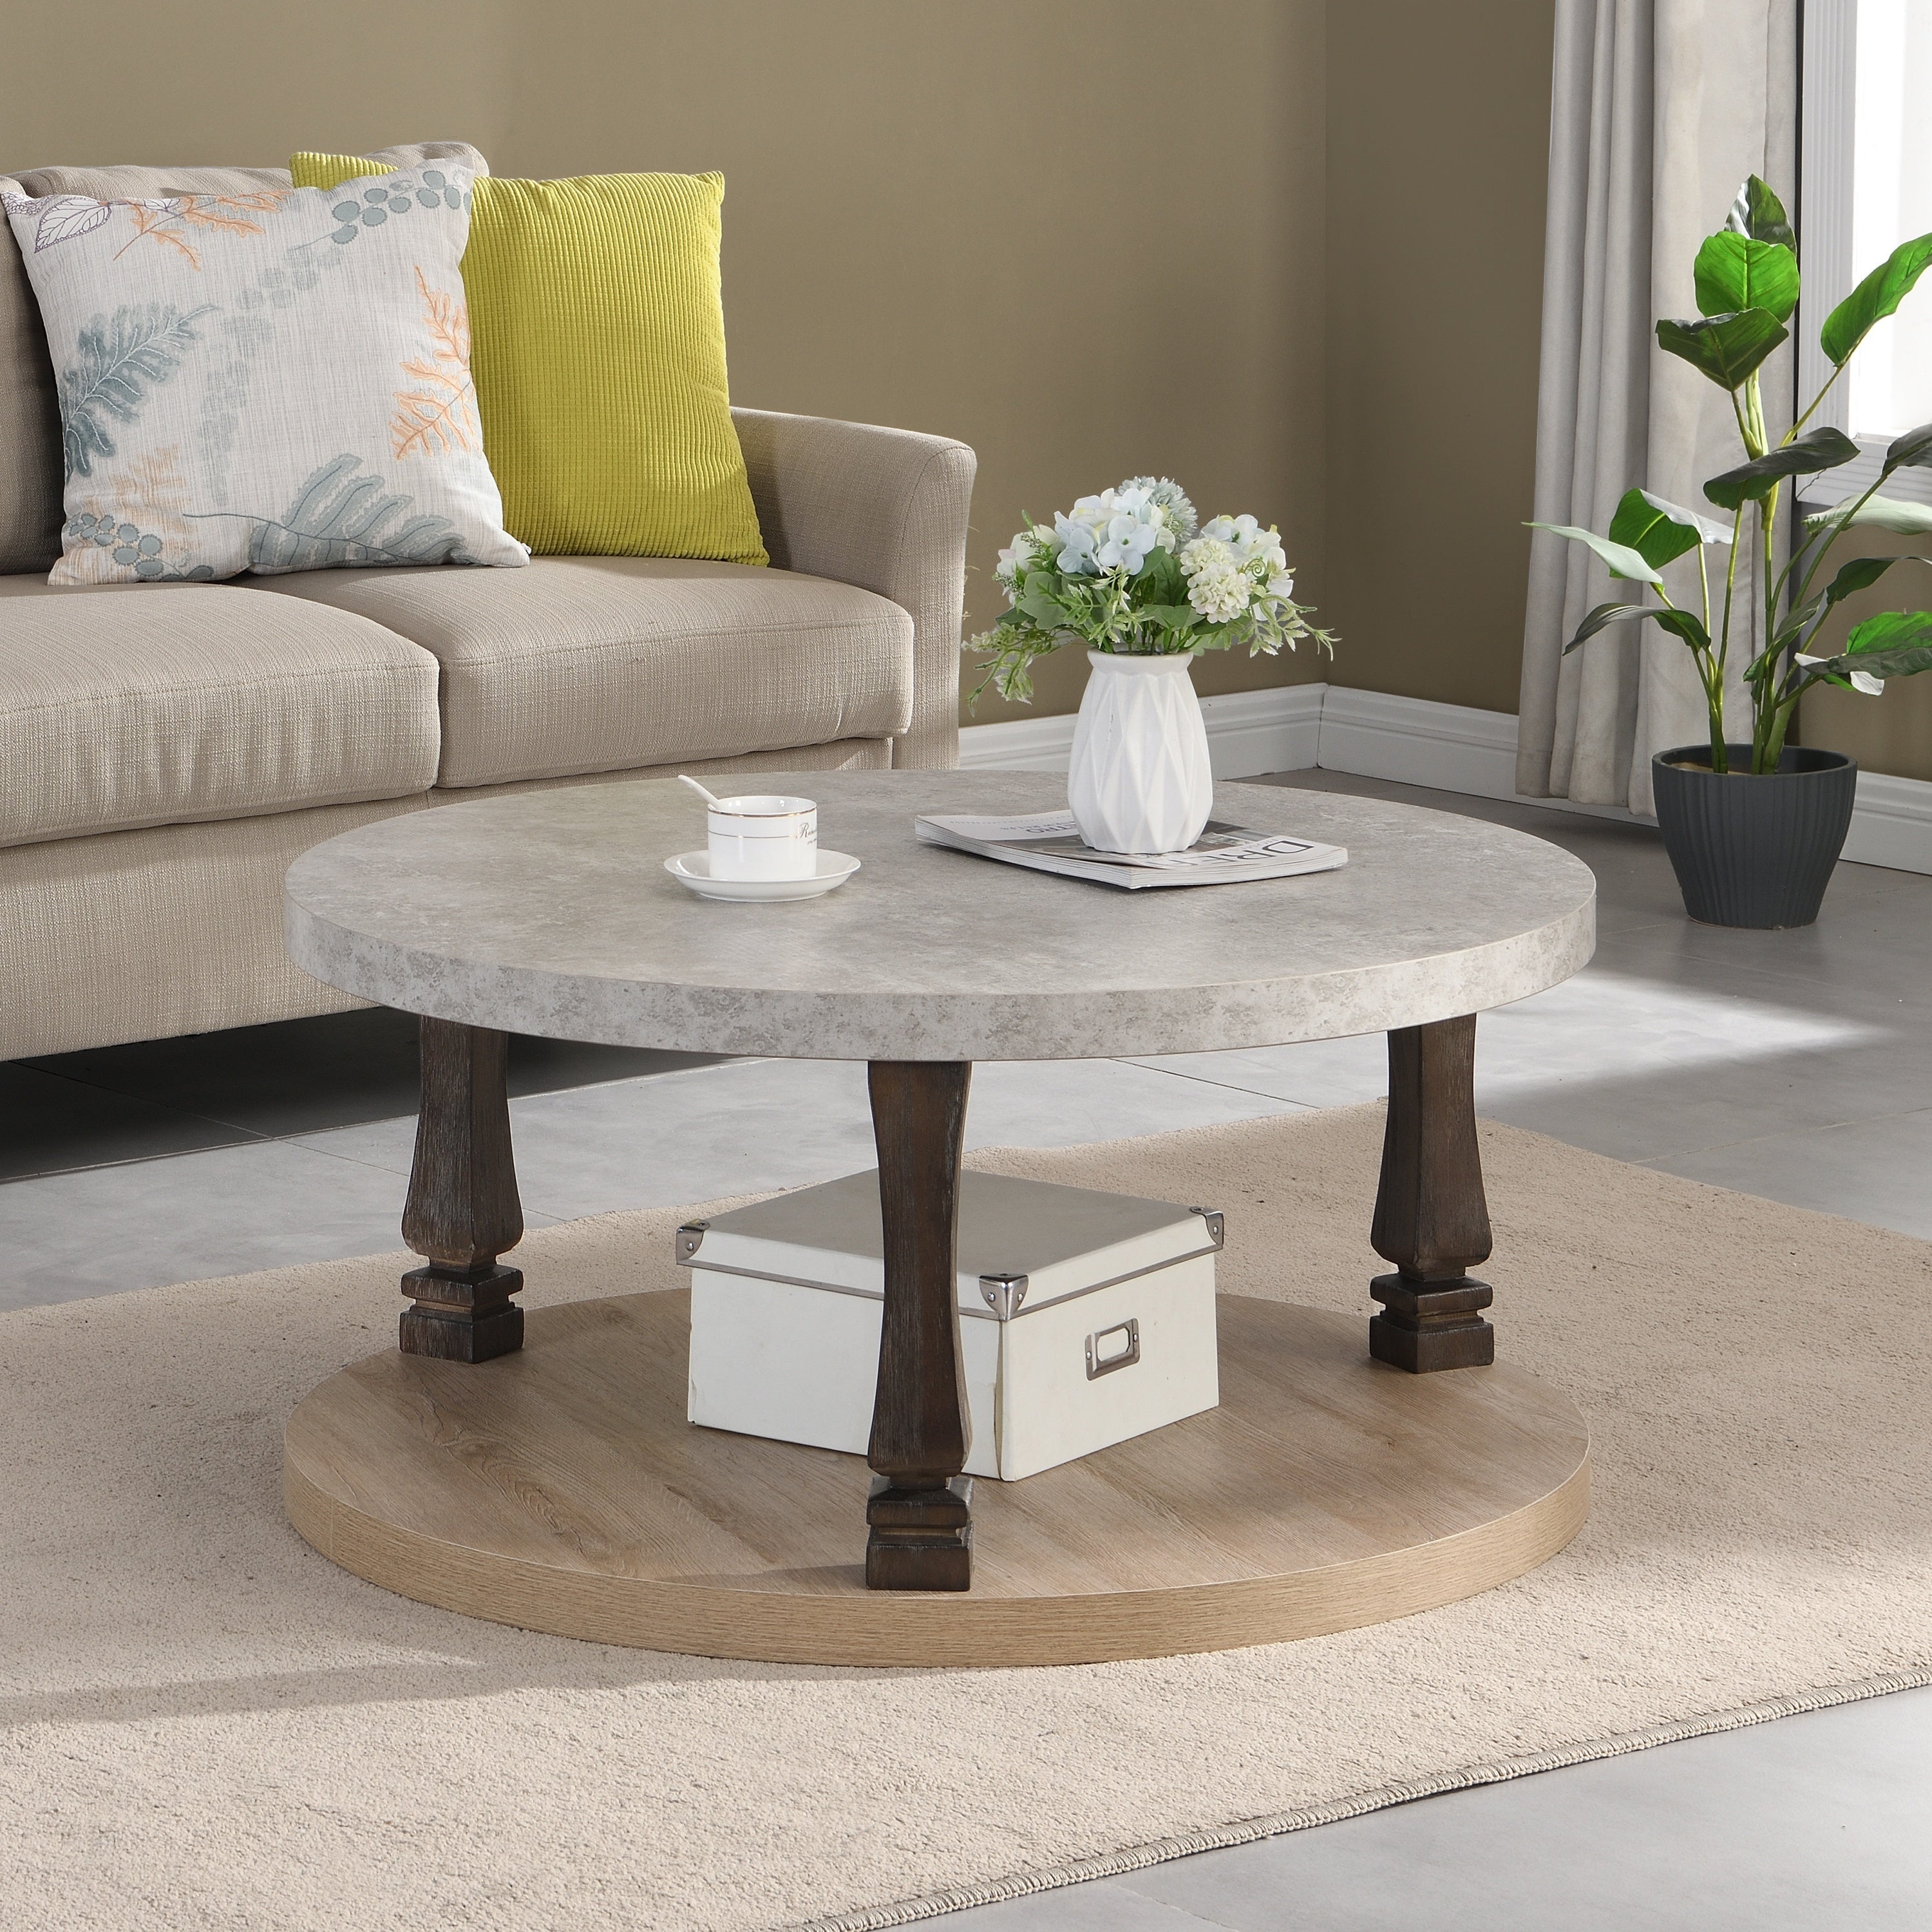 🆓🚛 Mid-Century 2-Tier Round Coffee Table With Storage Shelf, Gray